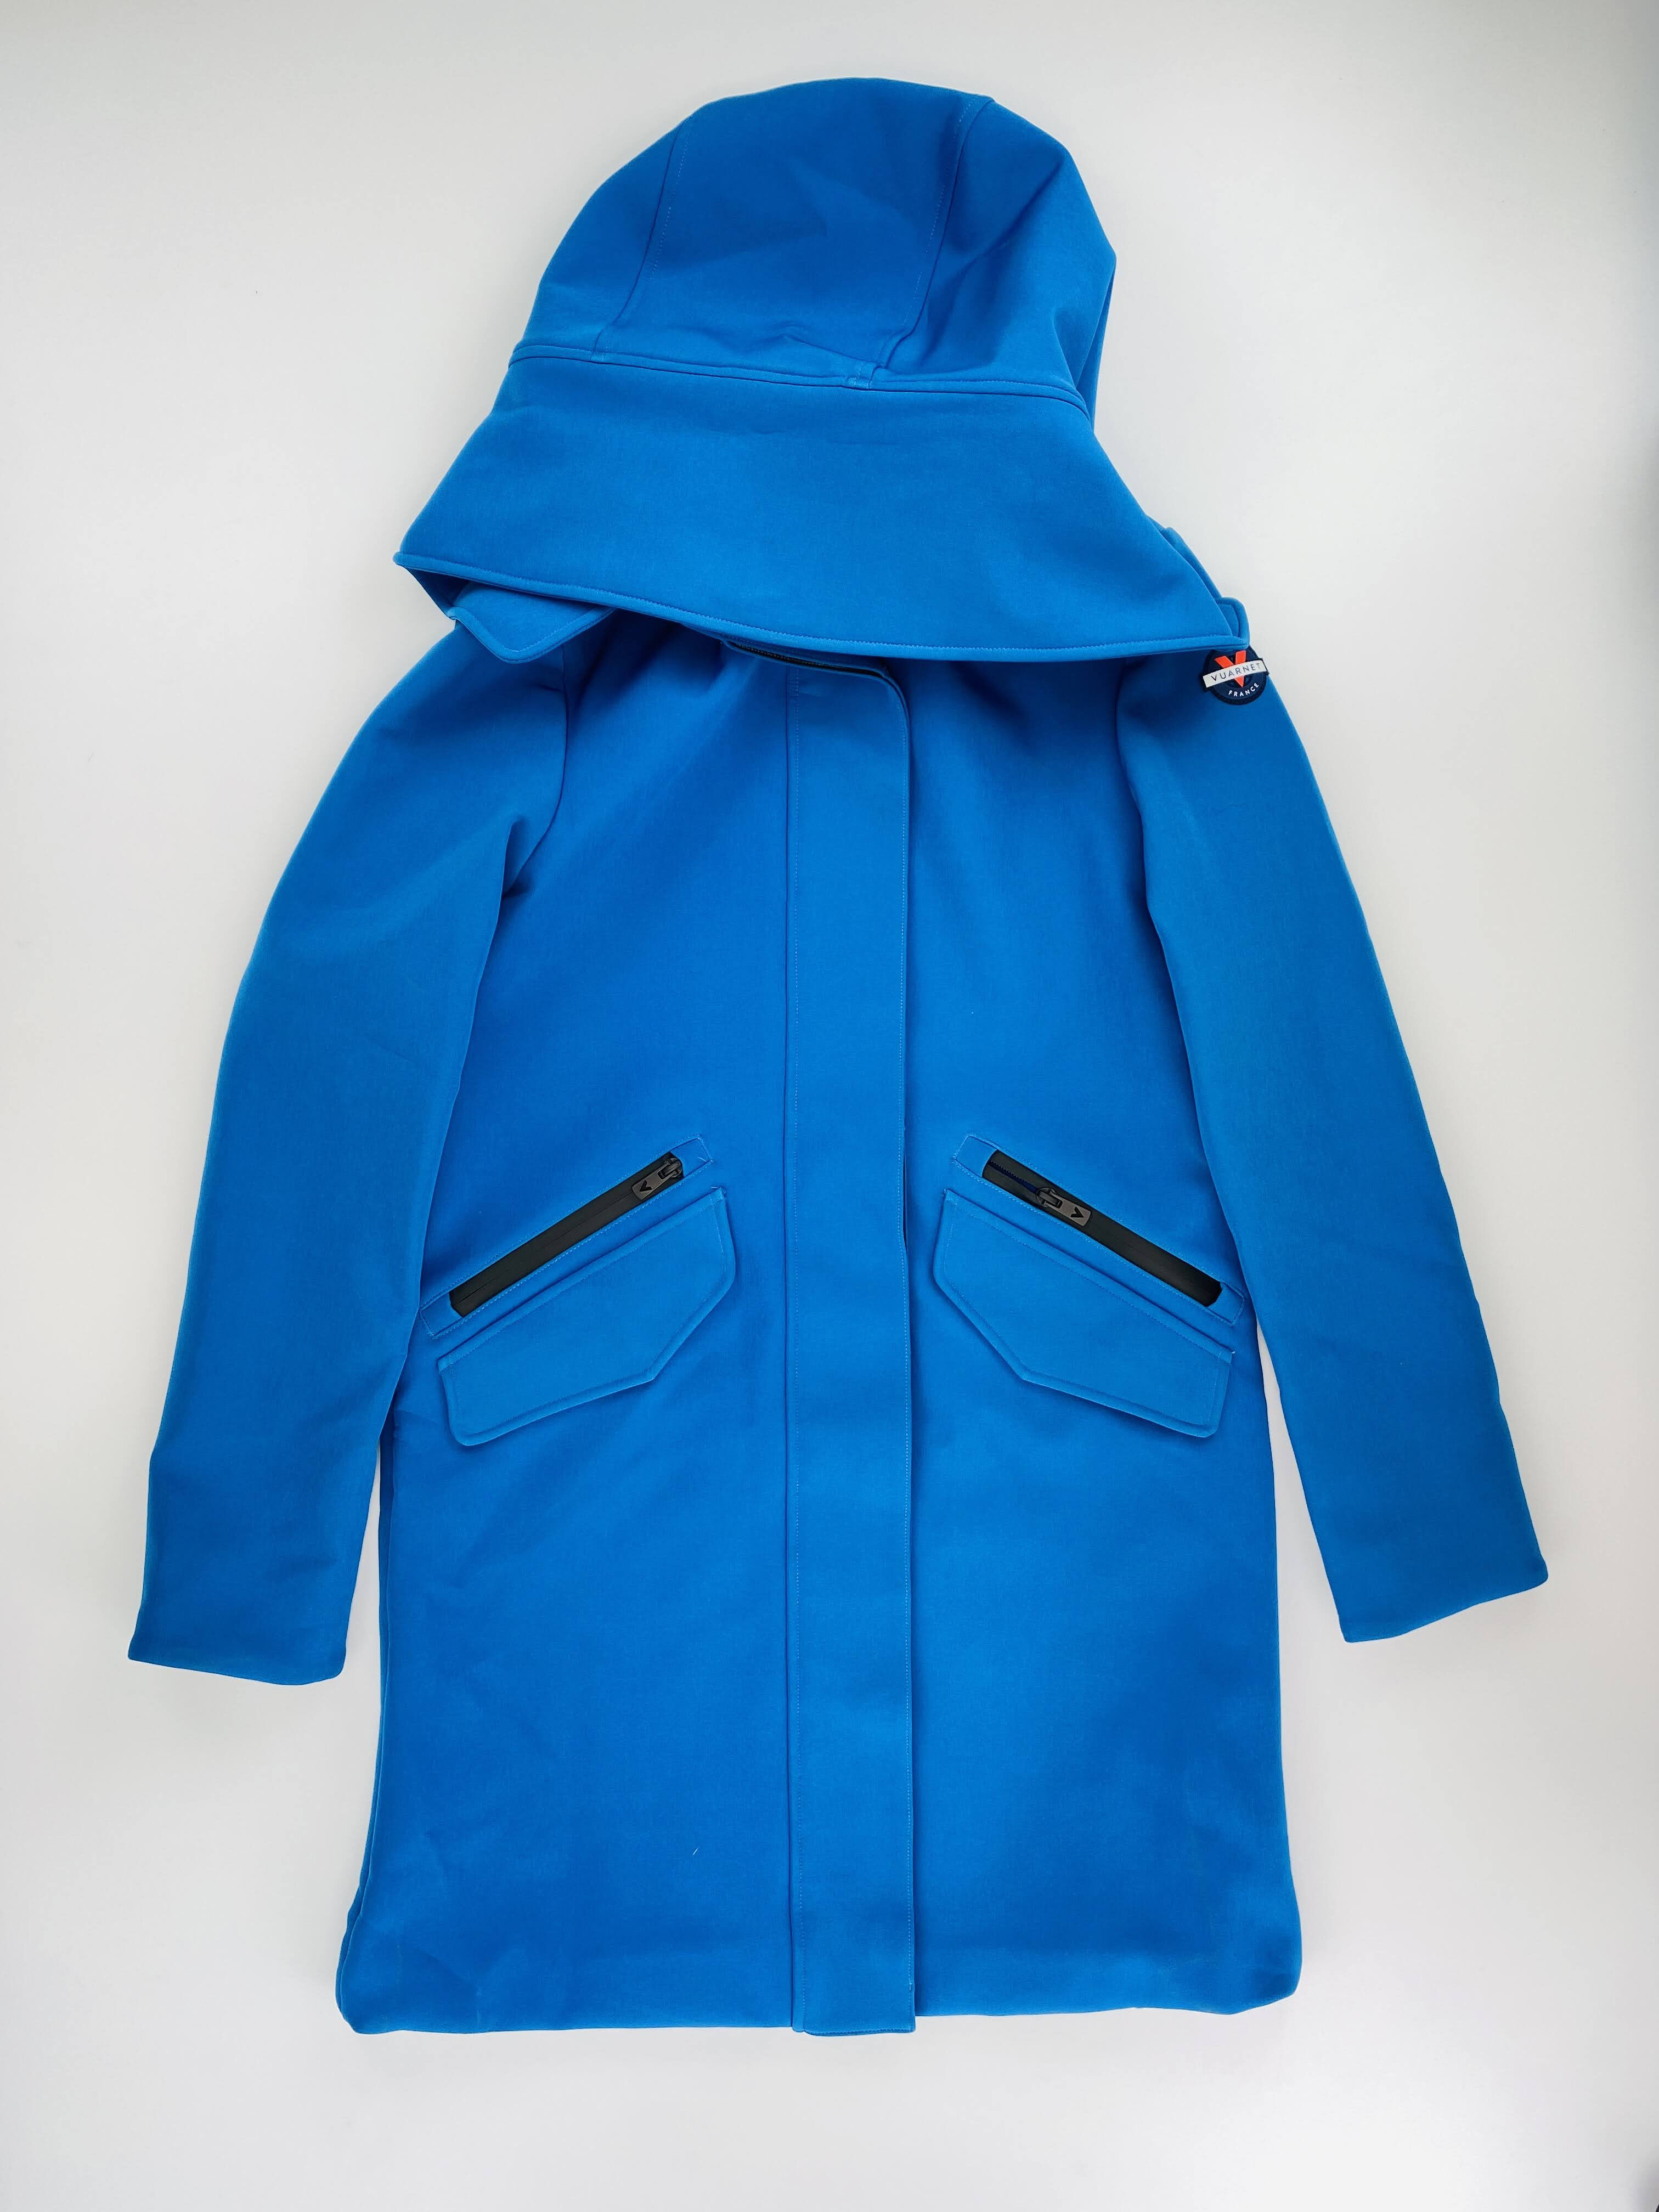 Vuarnet Laren Jacket - Segunda Mano Chaqueta - Mujer - Azul - S | Hardloop